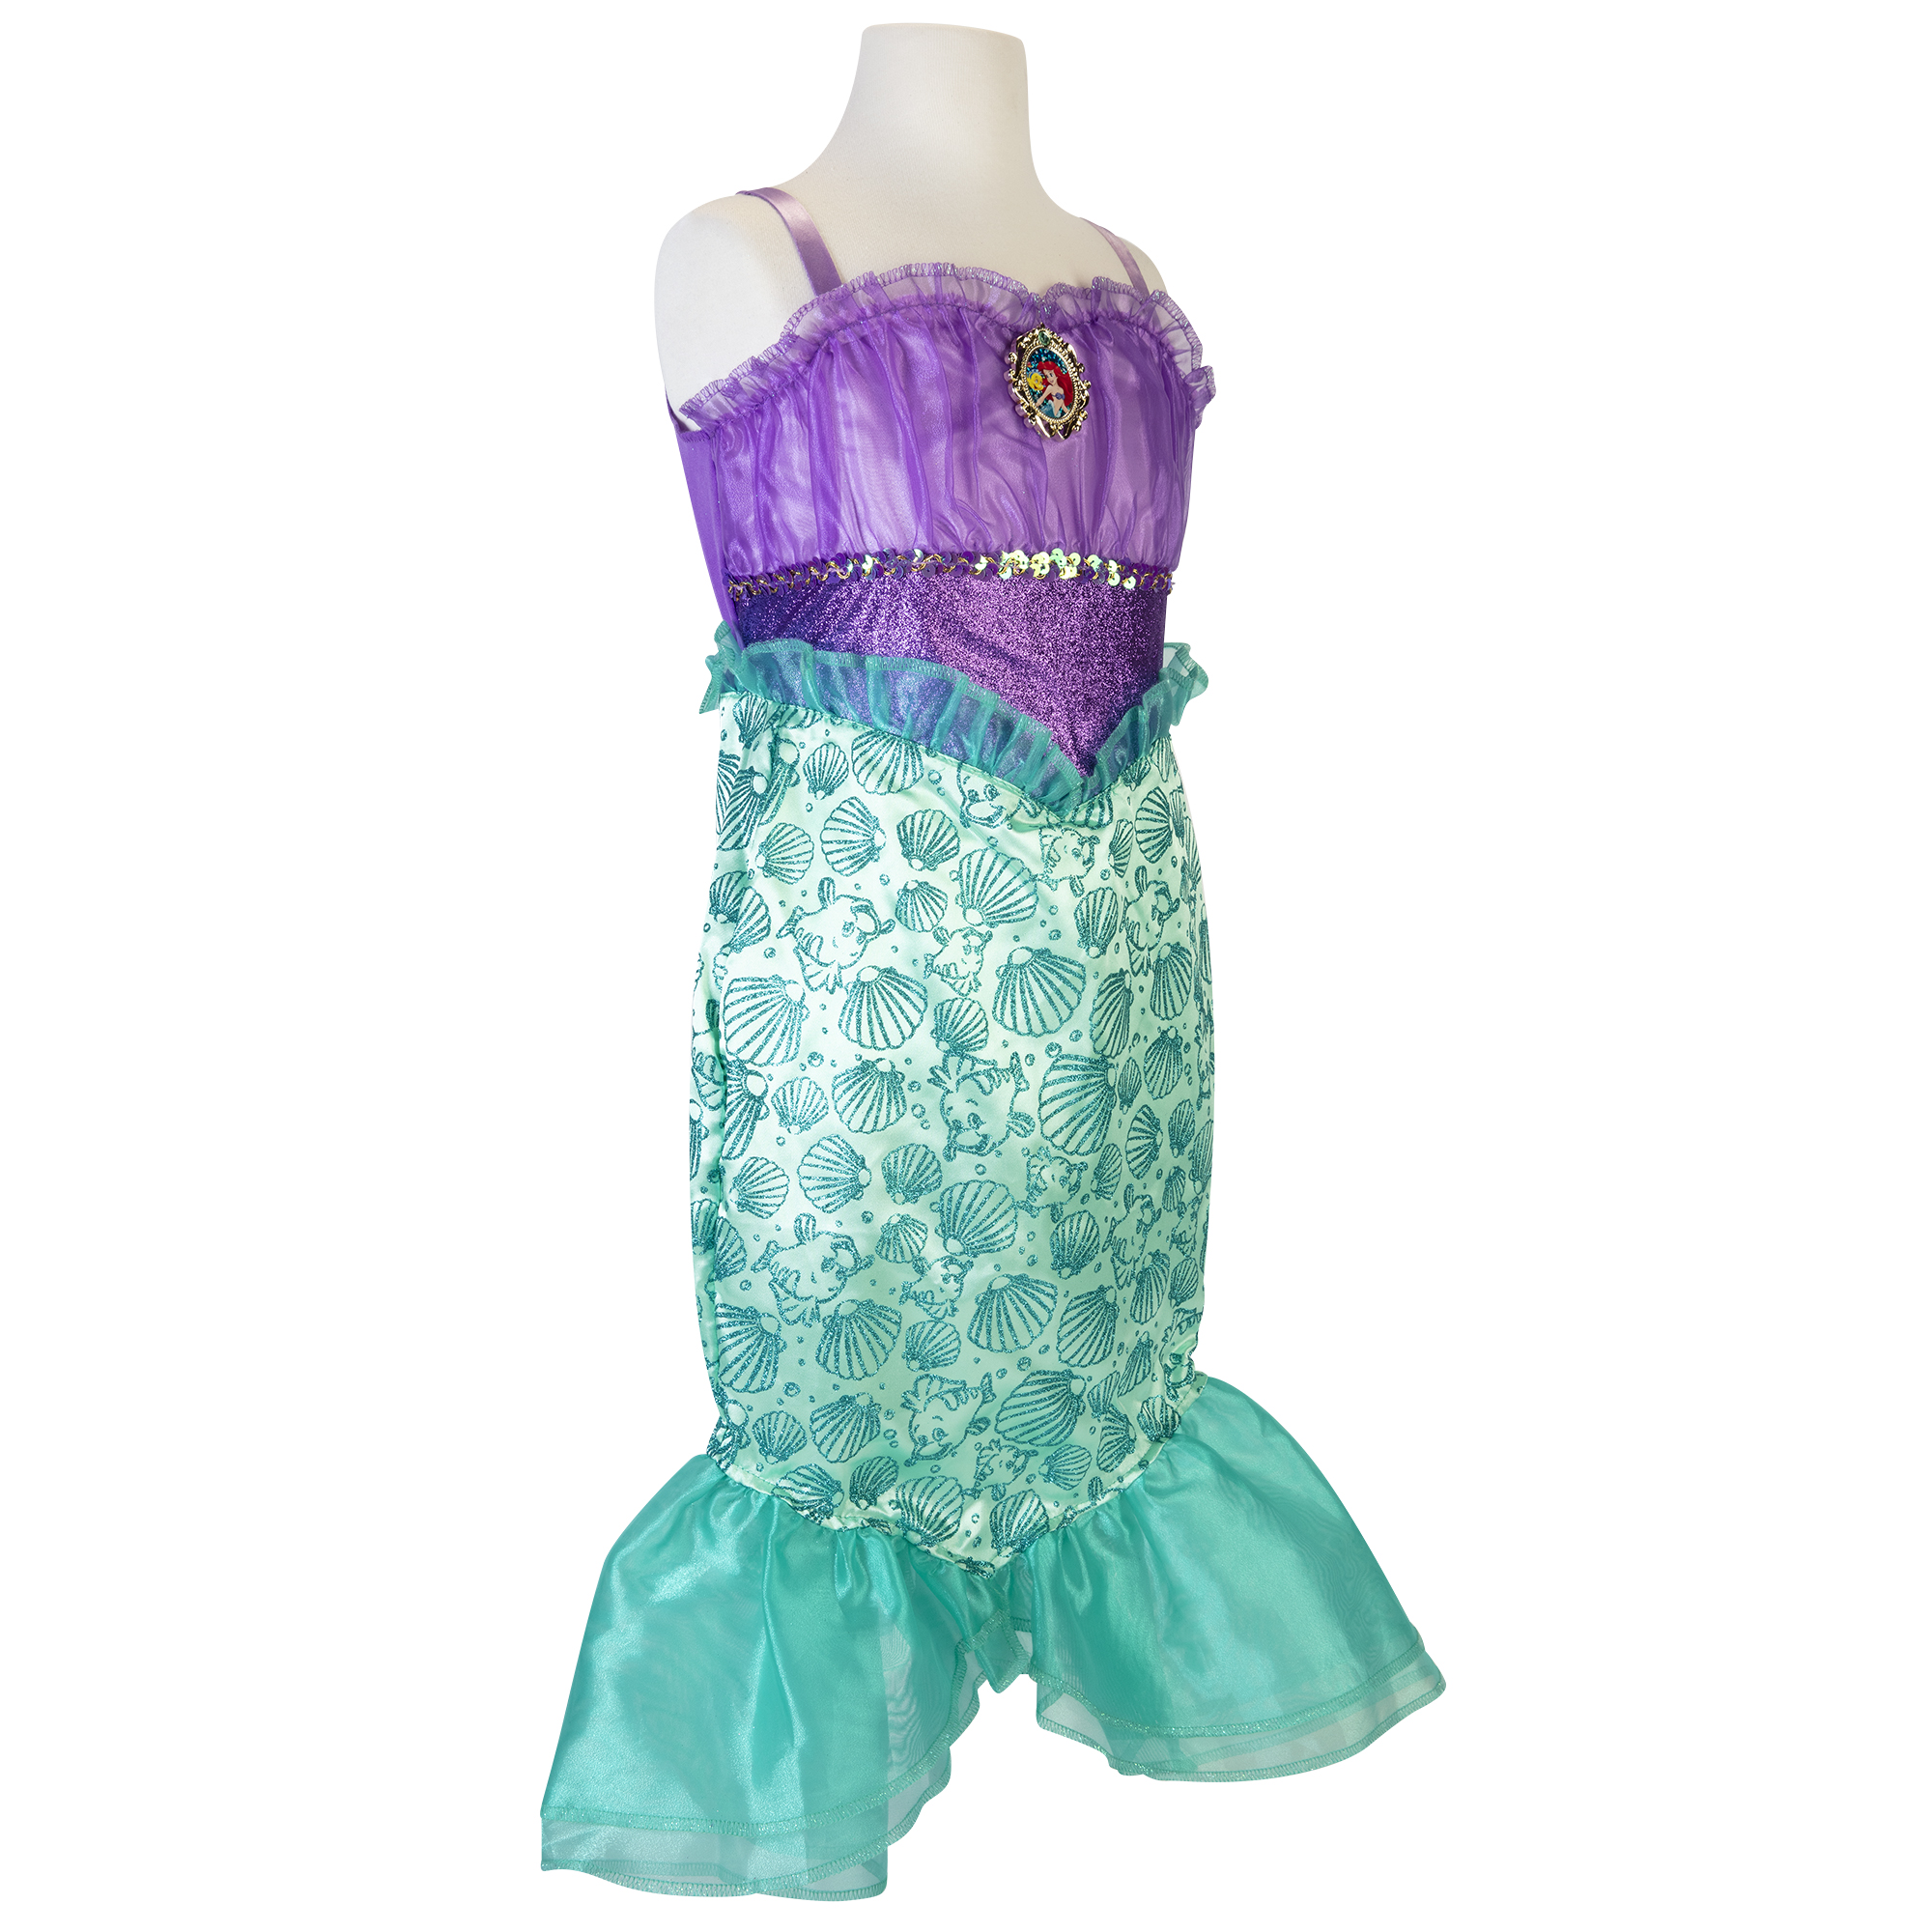 Disney Princess Ariel Children's Dress Perfect for Halloween or Dress Up - image 3 of 6